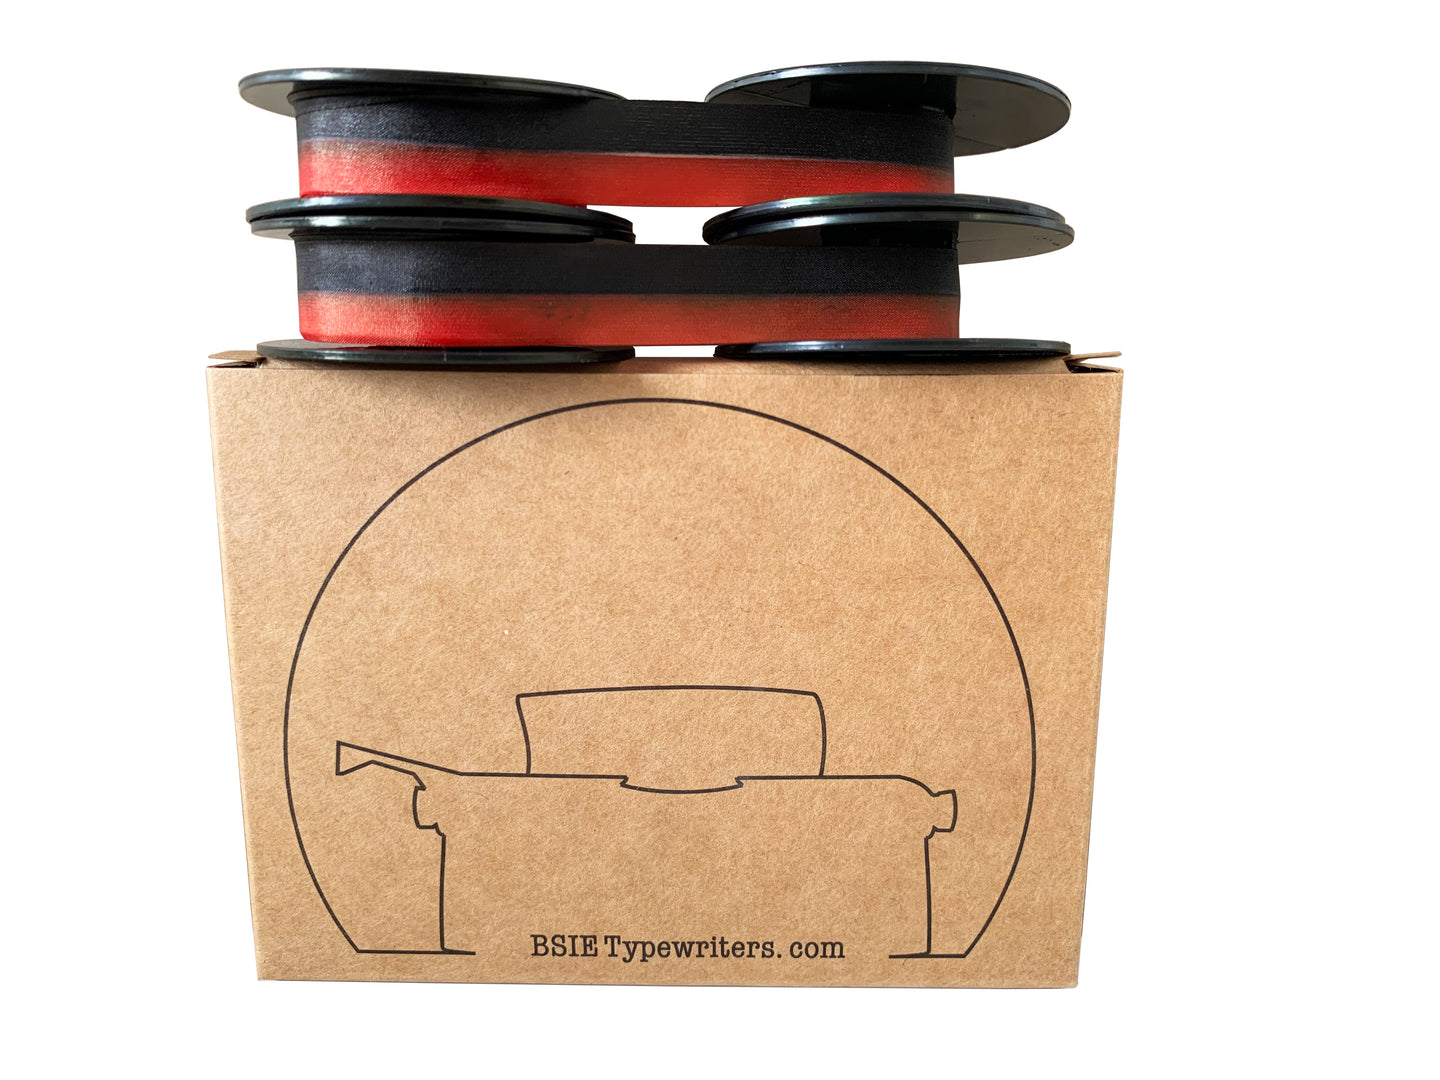 2 x Everest Typewriter Ribbon - Black or Black & red - High Quality